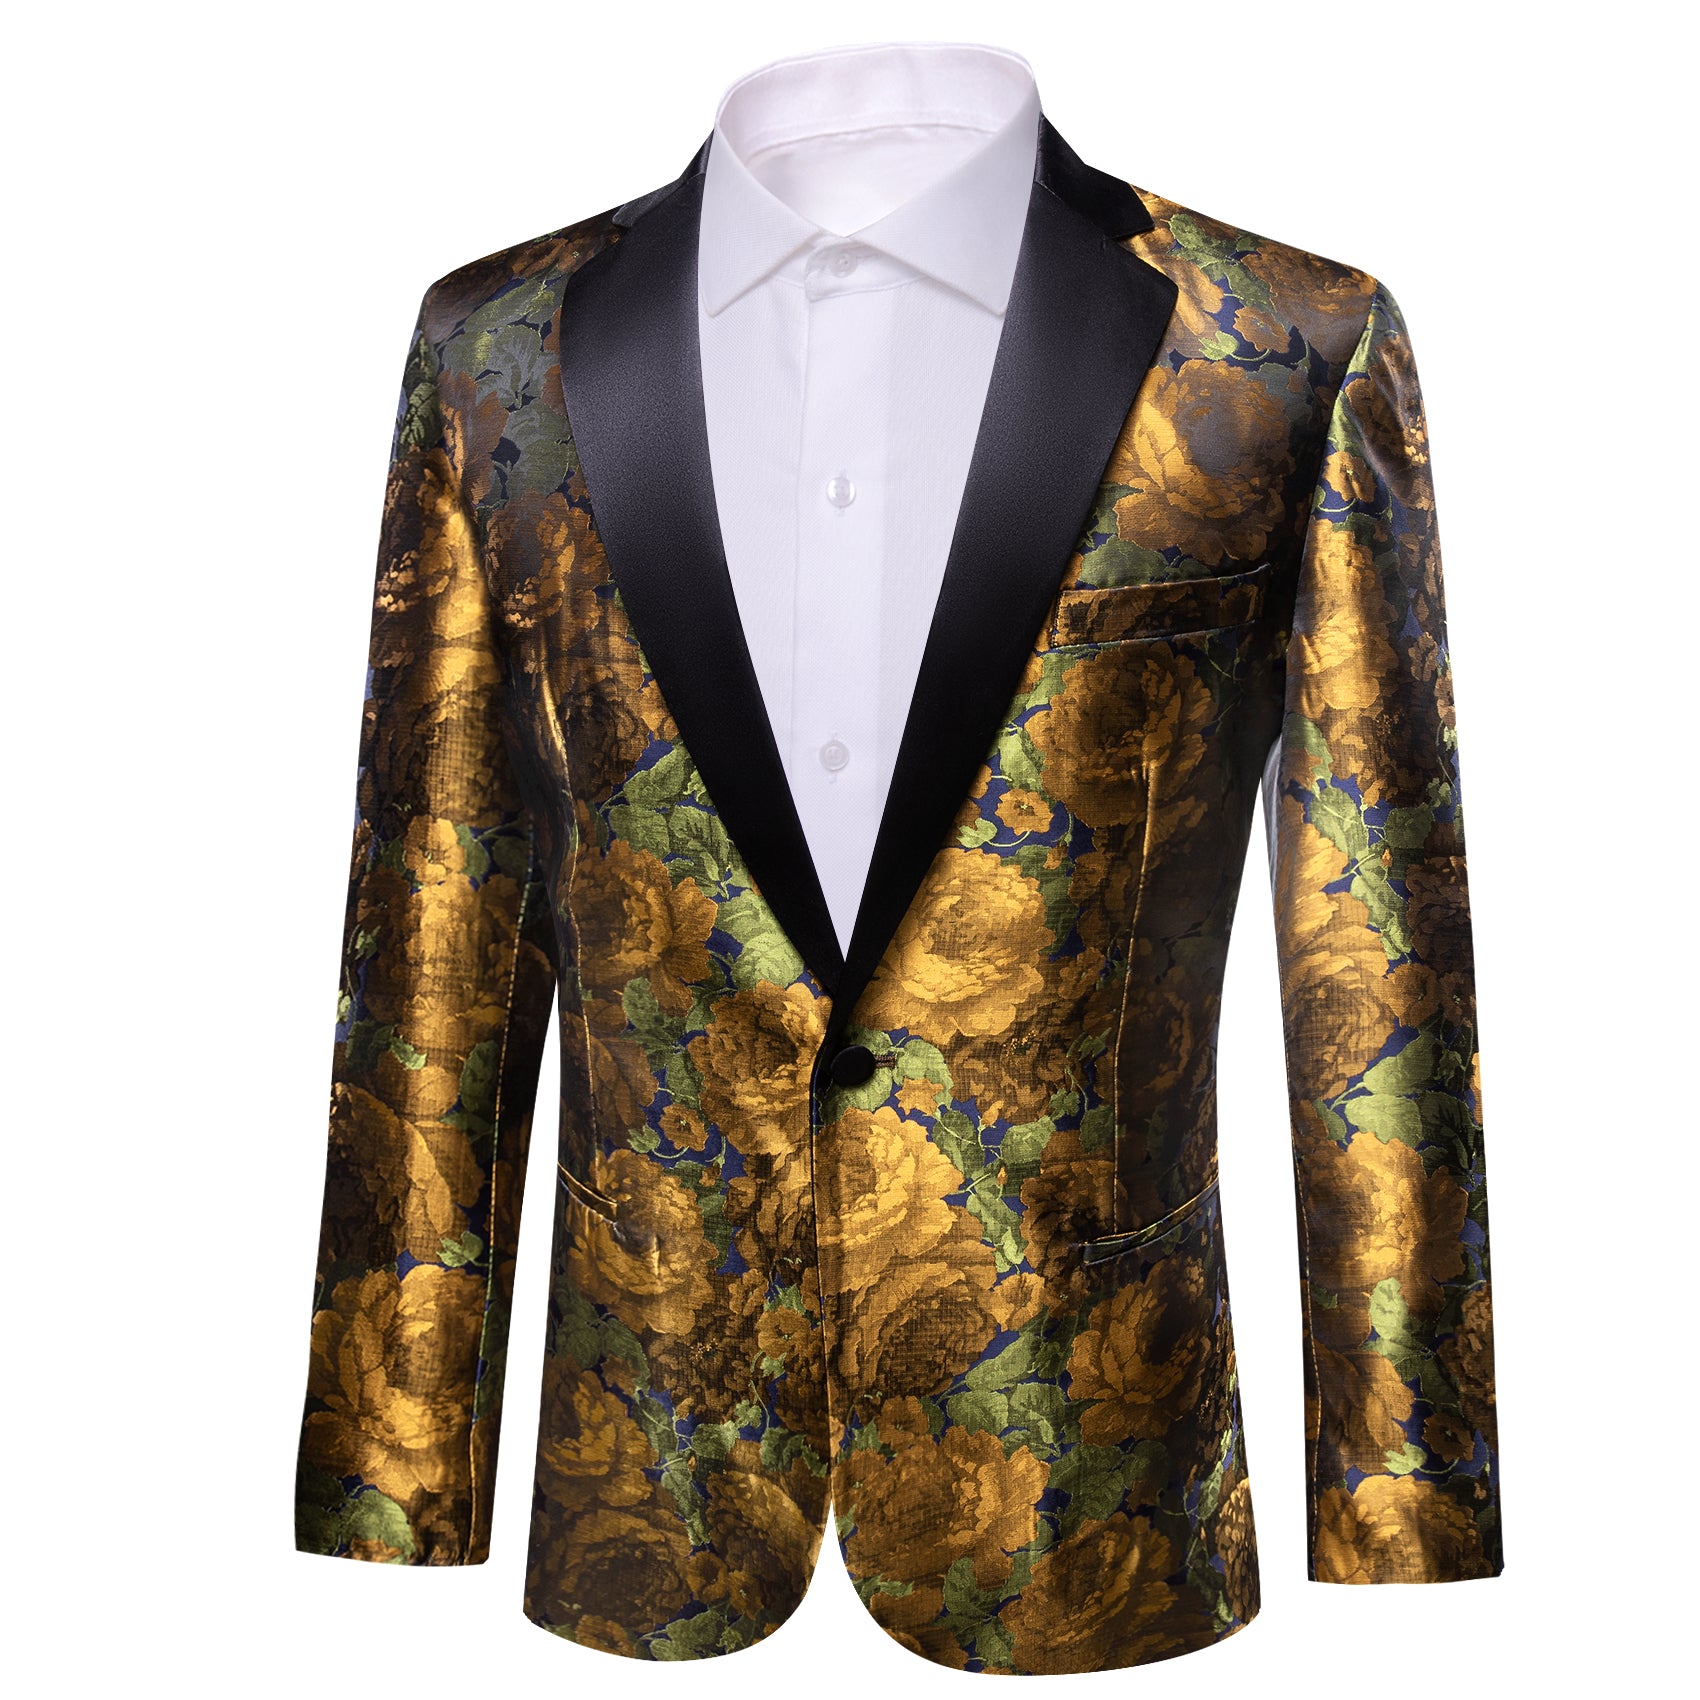 Barry.wang Men's Suit Gold Green Flower Notched Collar Suit Jacket